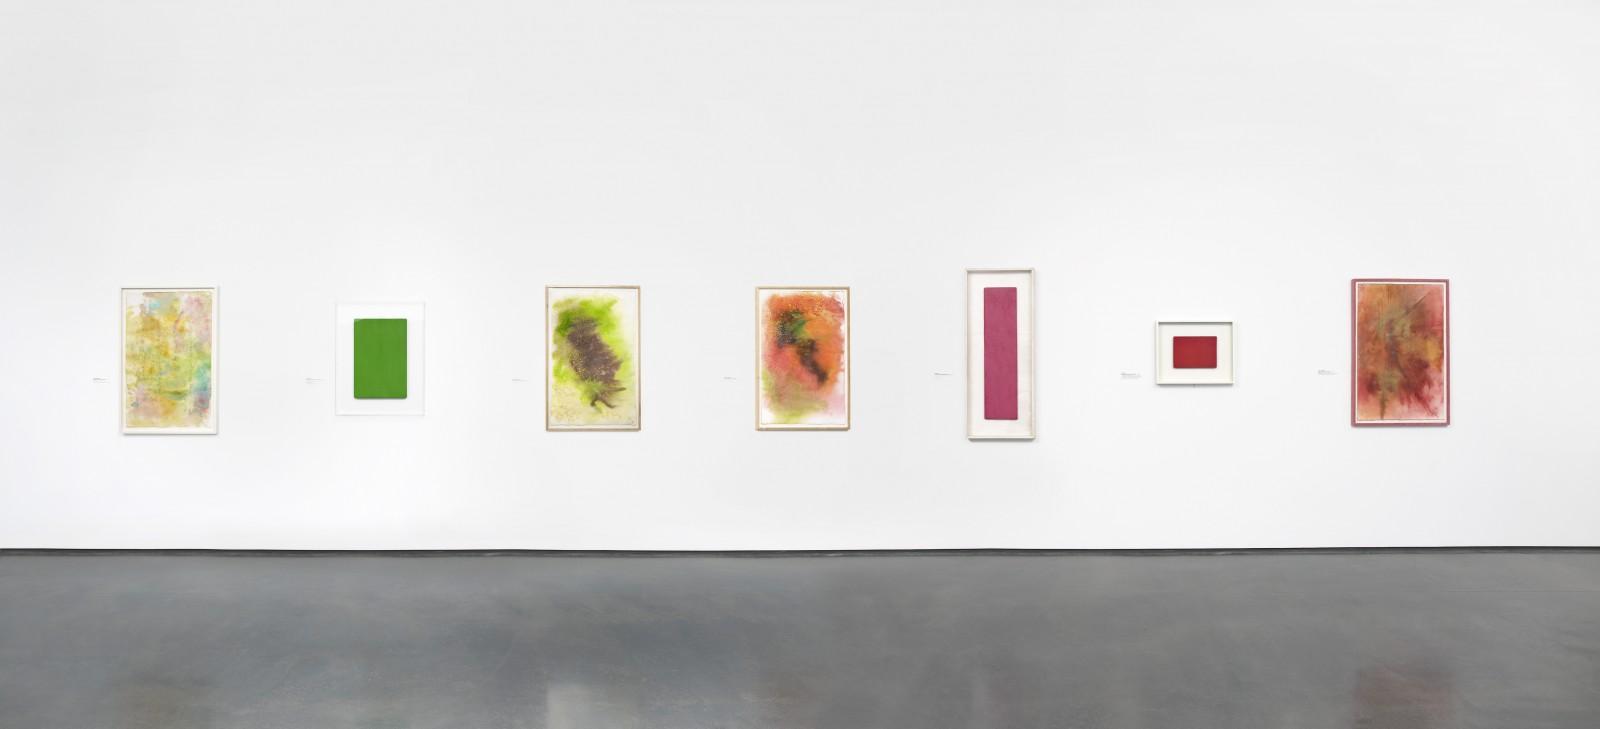 View of the exhibition "Yves Klein / David Hammons", Aspen Art Museum, 2014